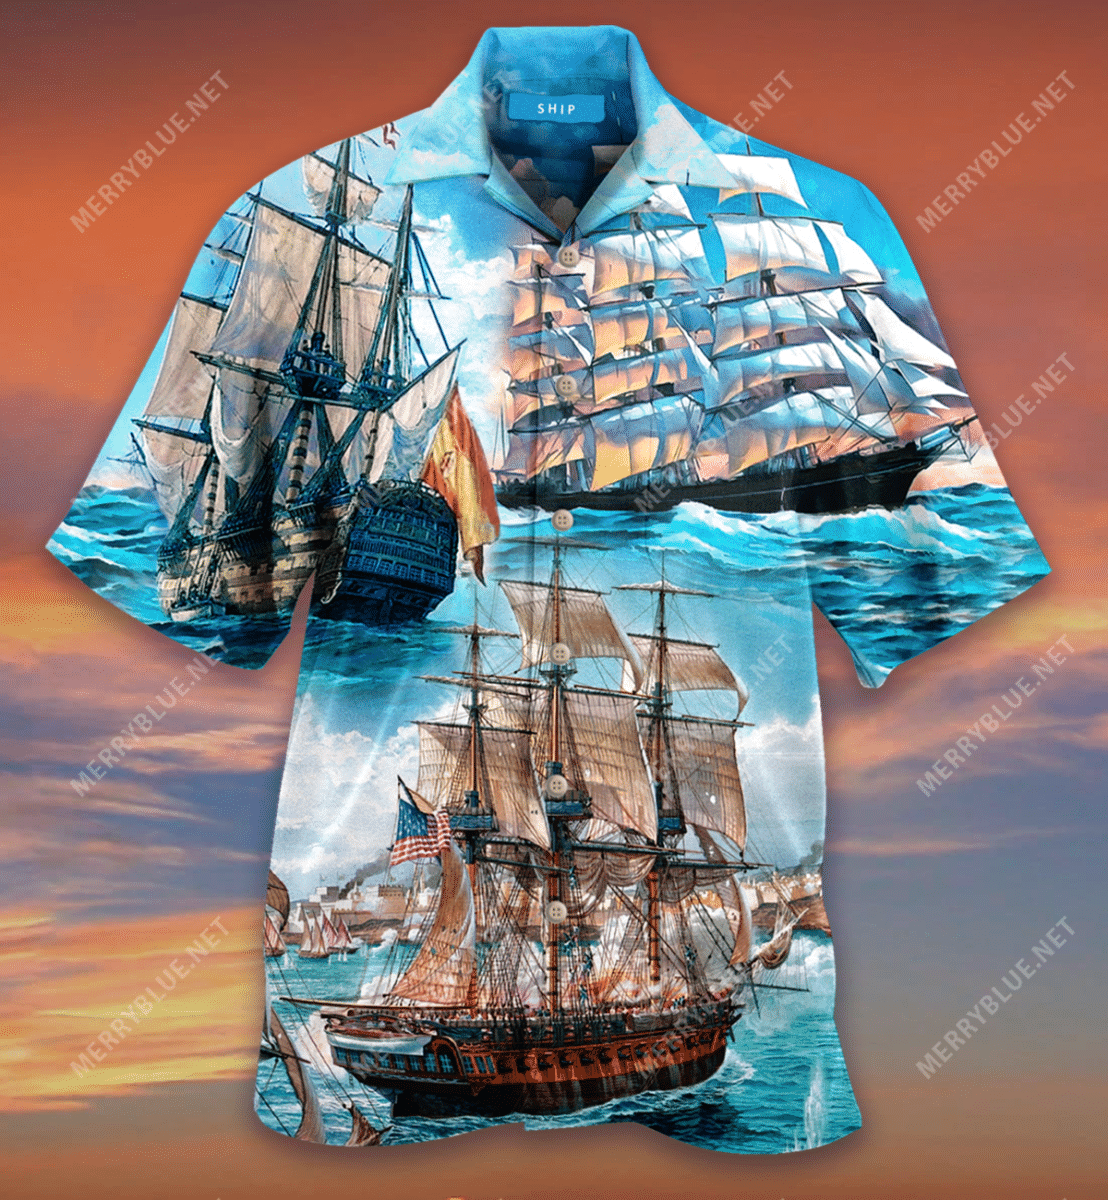 Come Sail Away With Me Hawaiian Shirt